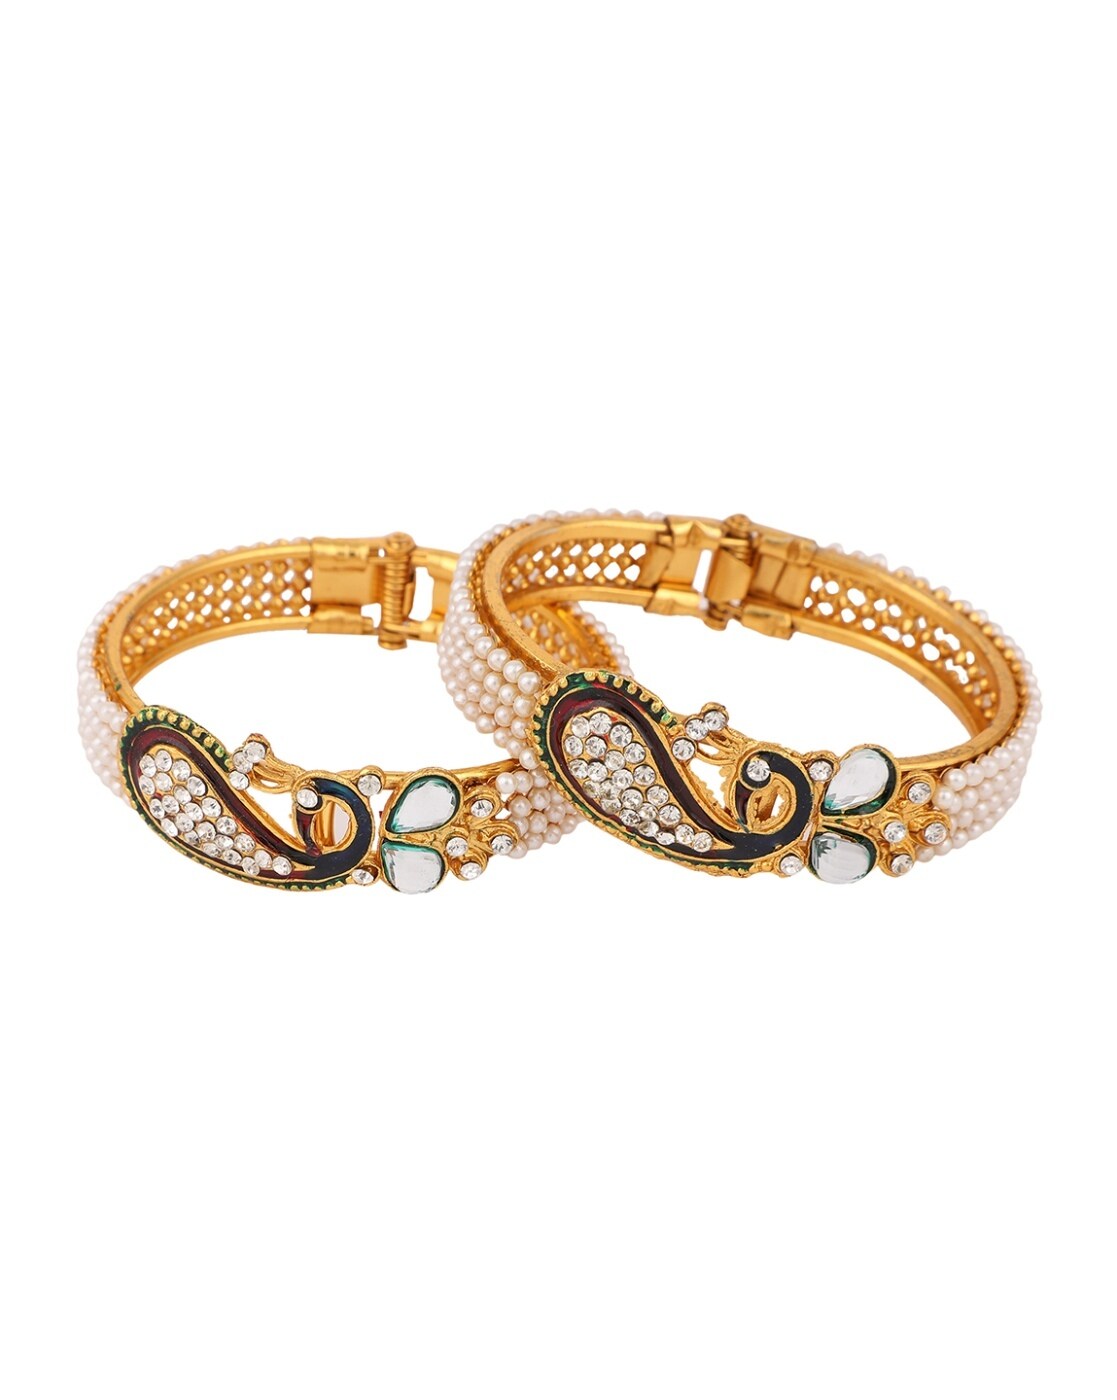 Buy Niscka Ruby & Pearl Gold Plated Bangles Bracelet online